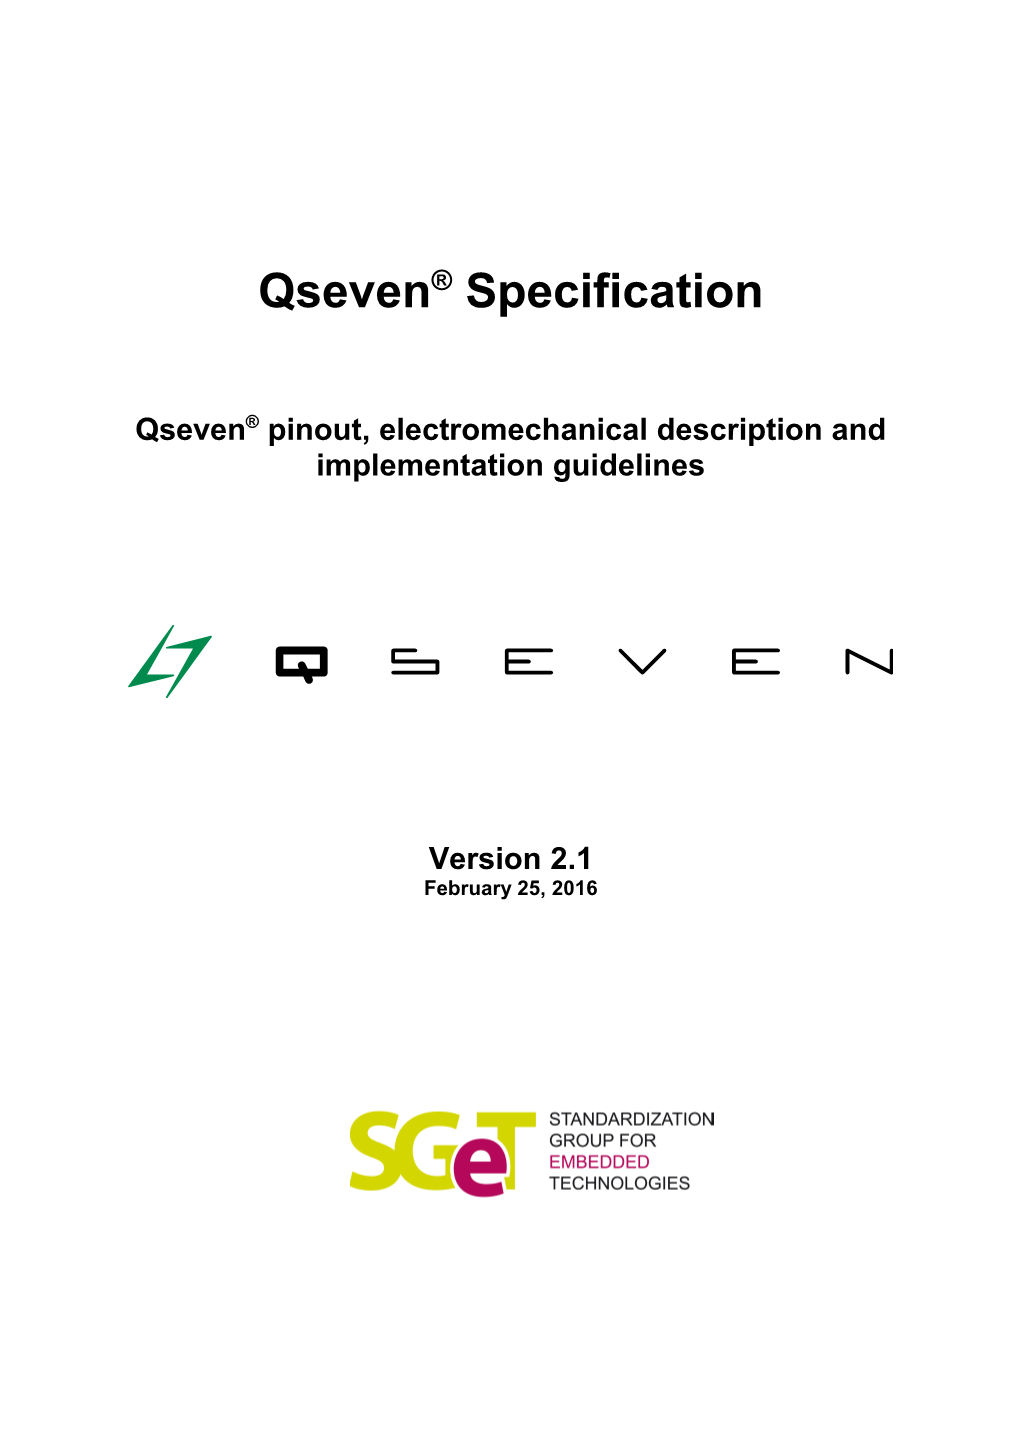 Qseven Specification Rev